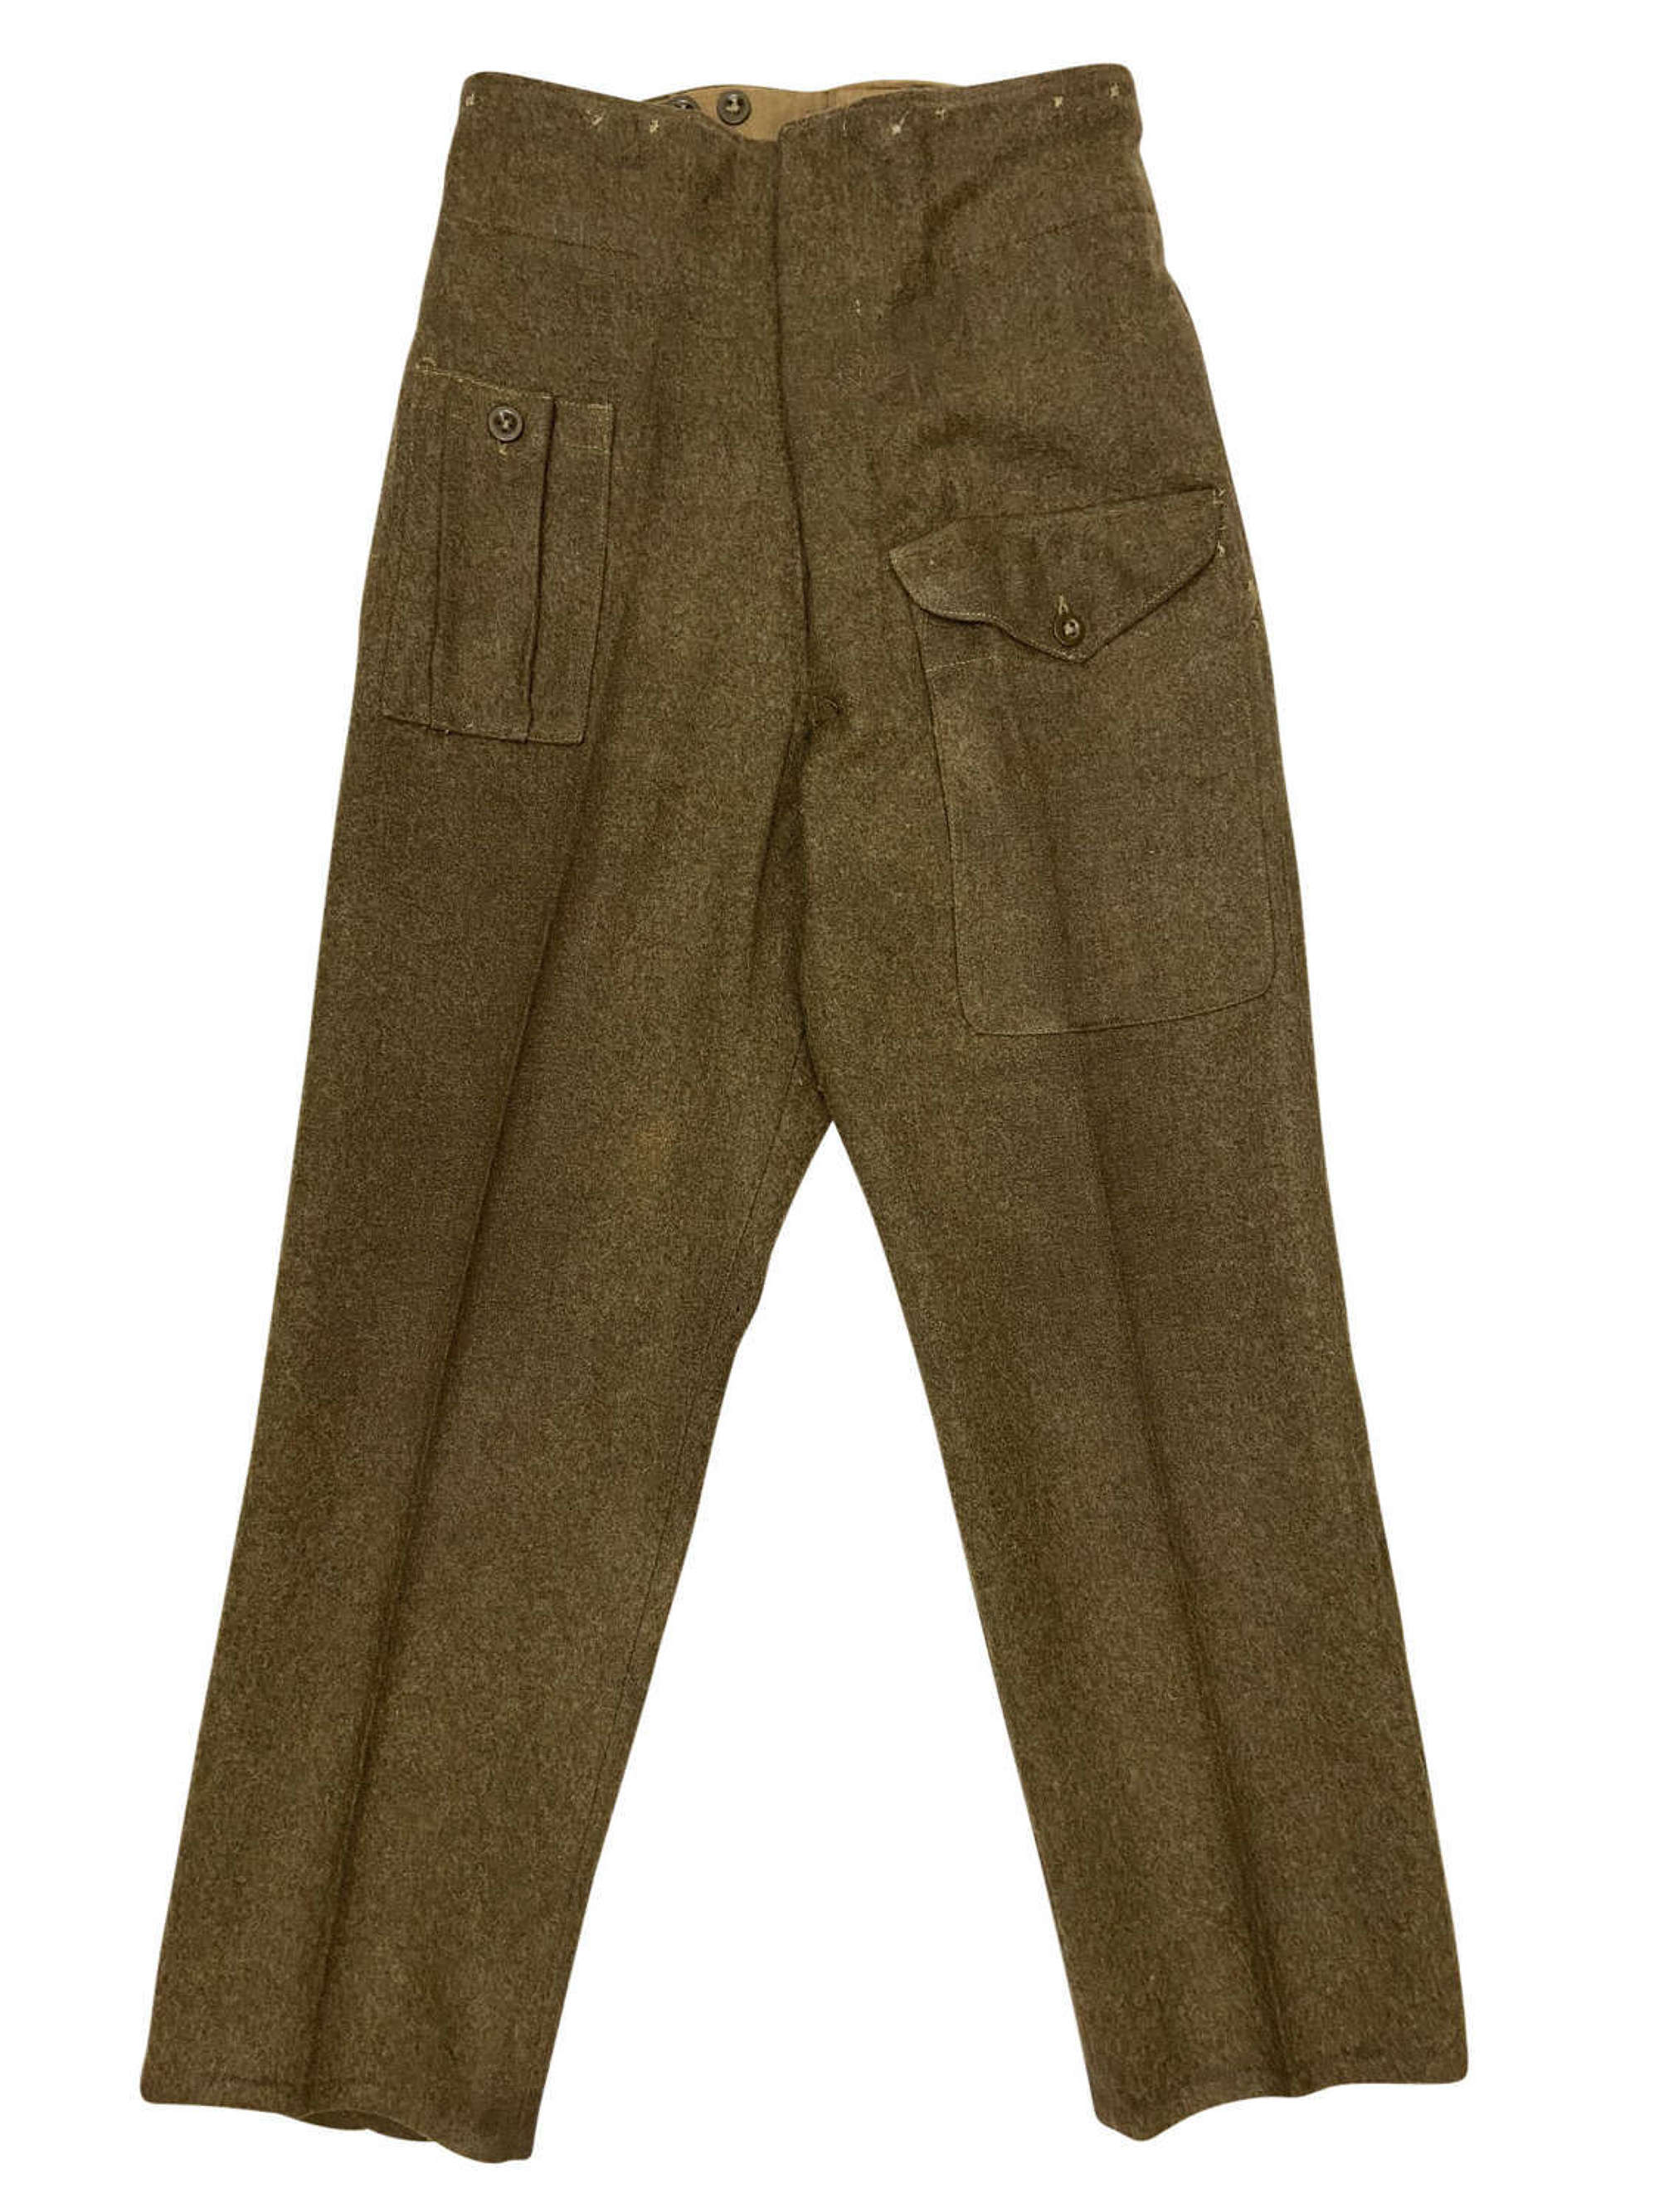 Original 1946 Pattern Battledress Trousers Dated 1947 Size 1